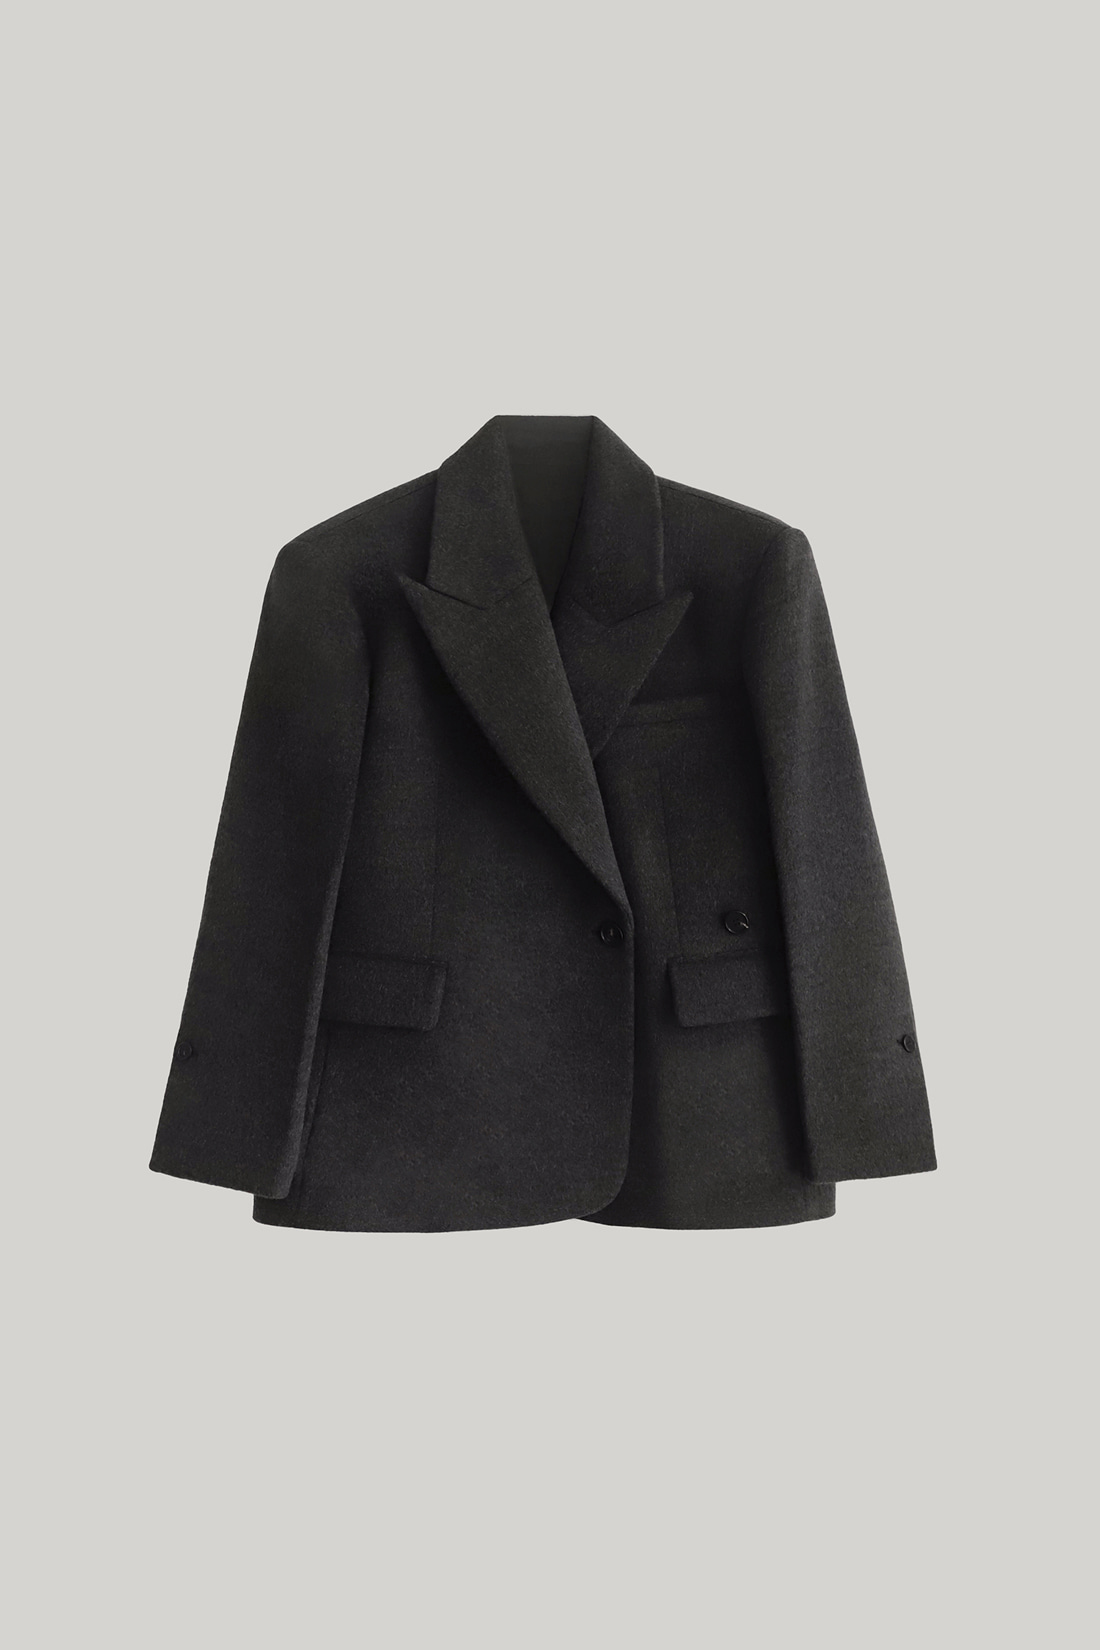 [LIMITED]  Prince Cashmere Half Jacket (Charcoal)